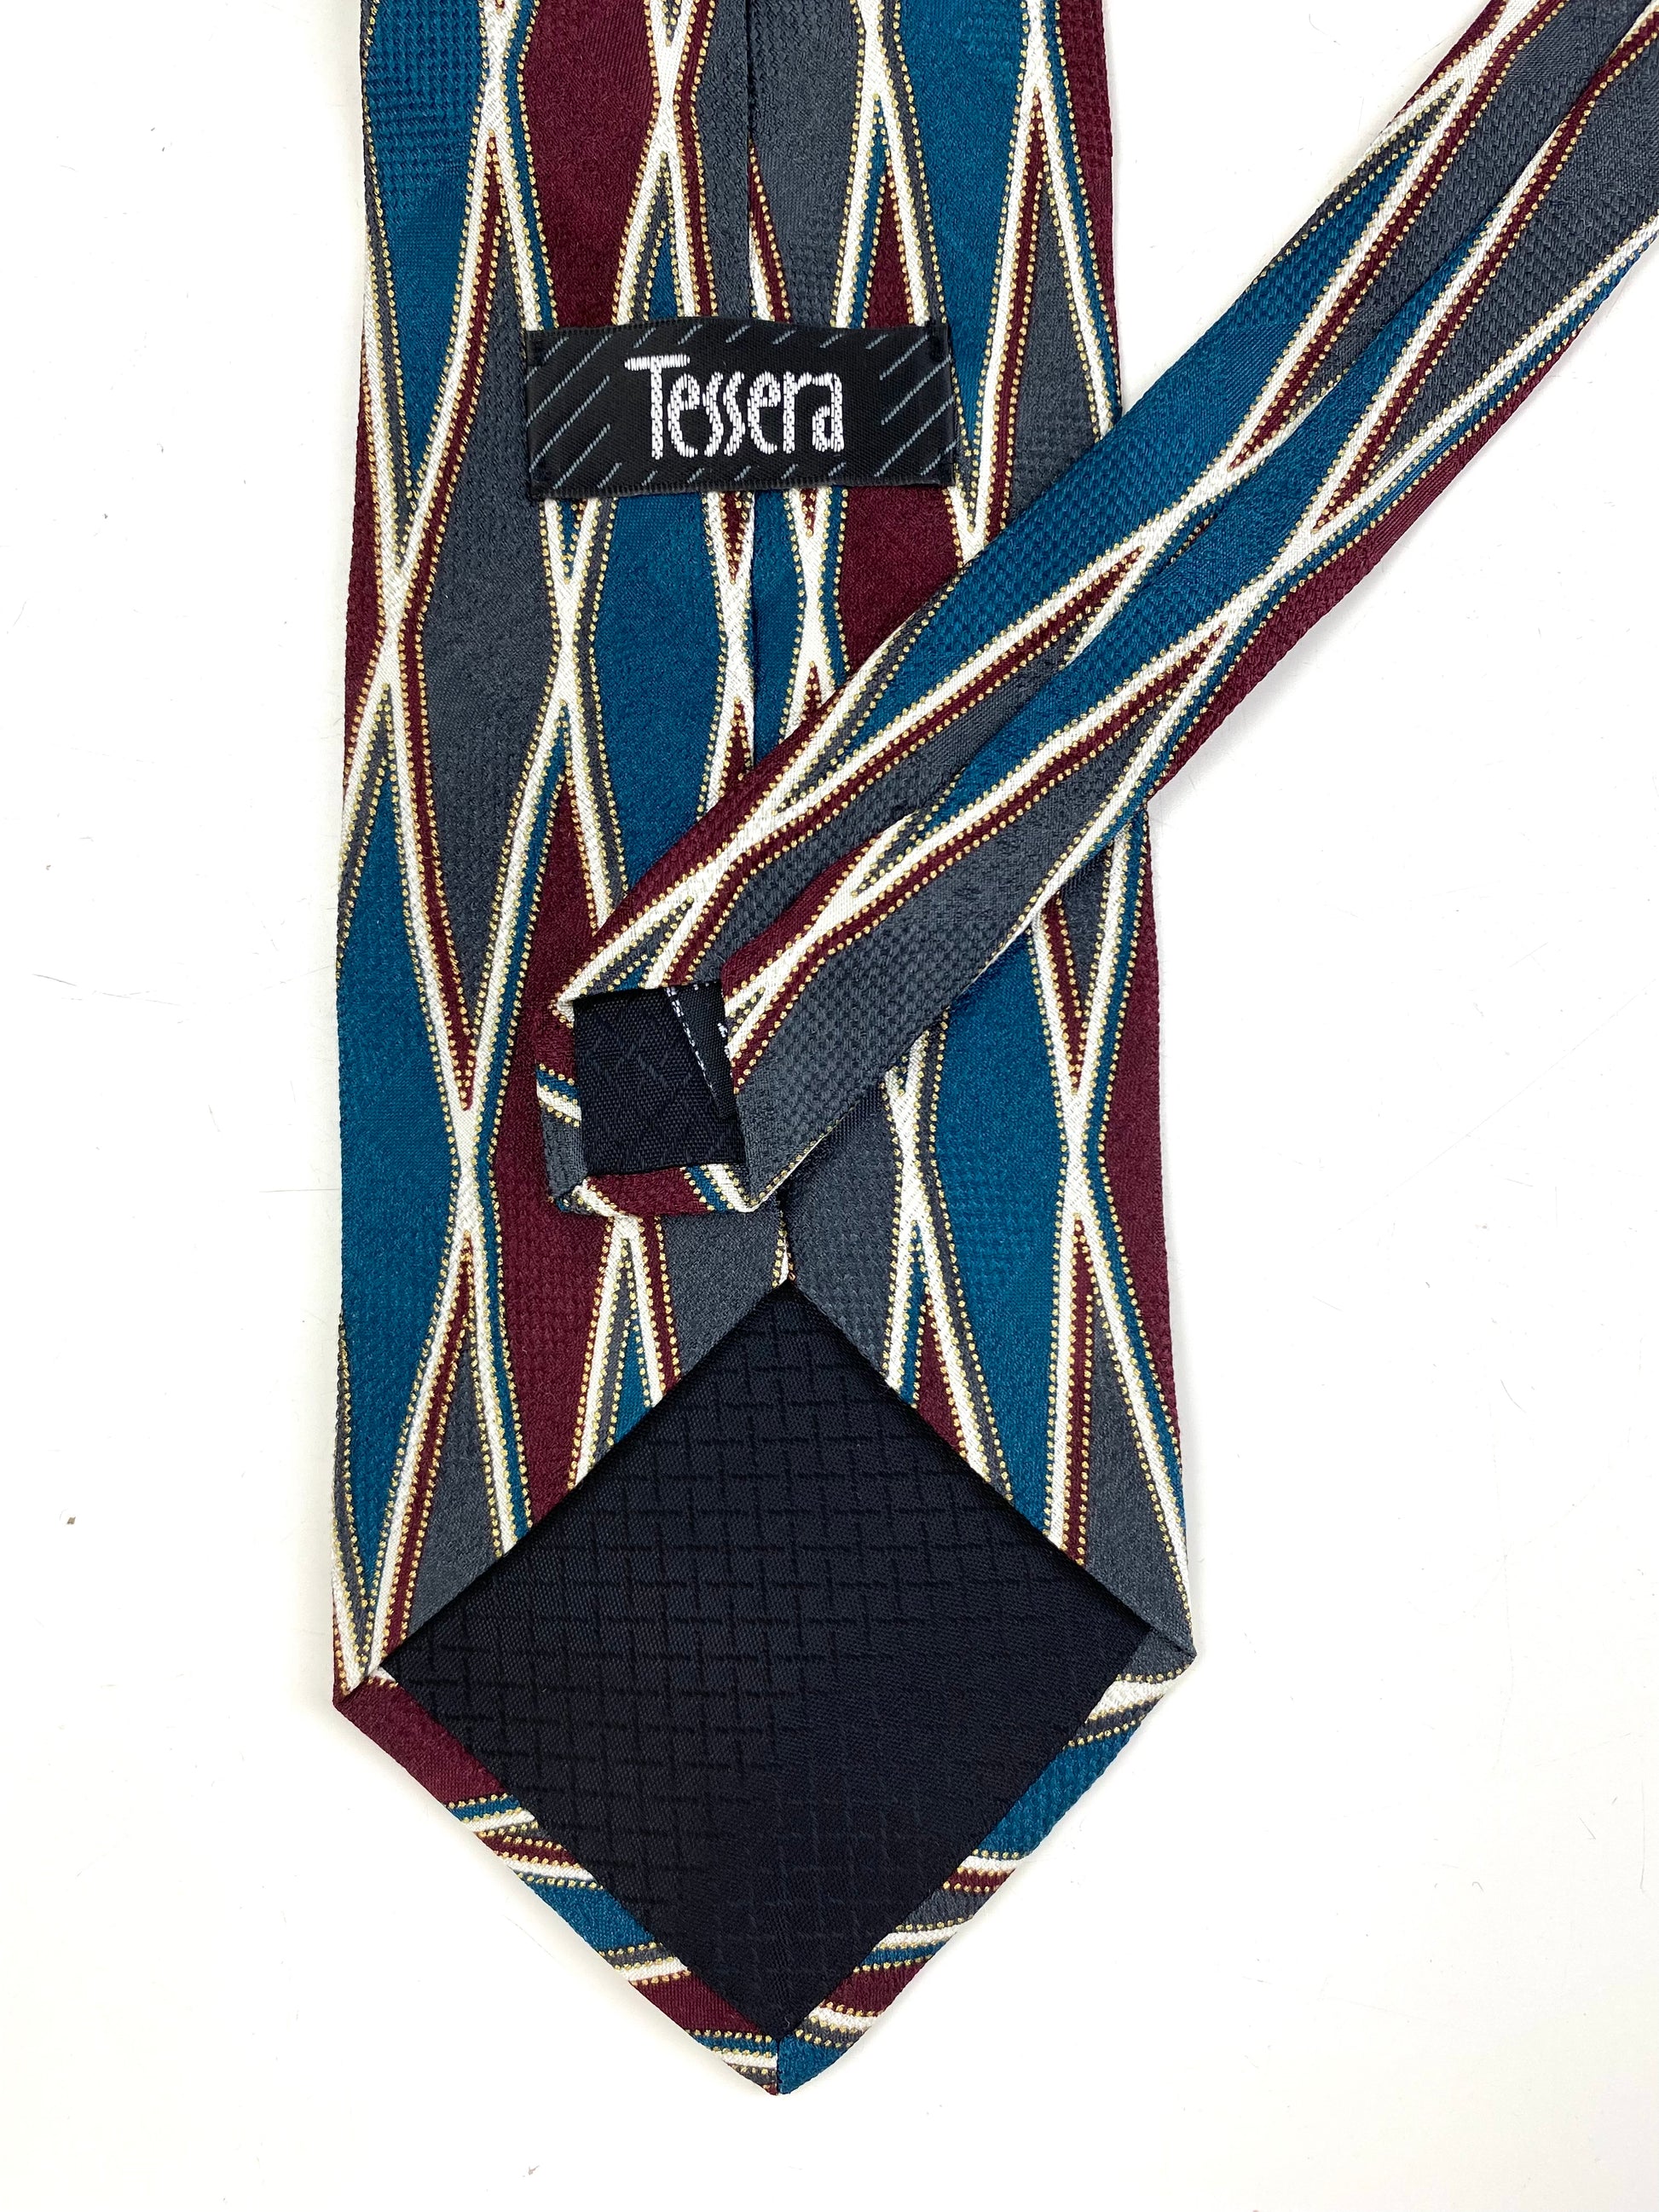 Back and labels of: 90s Deadstock Silk Necktie, Men's Vintage Teal/ Maroon/ Grey Diamond Harlequin Pattern Tie, NOS